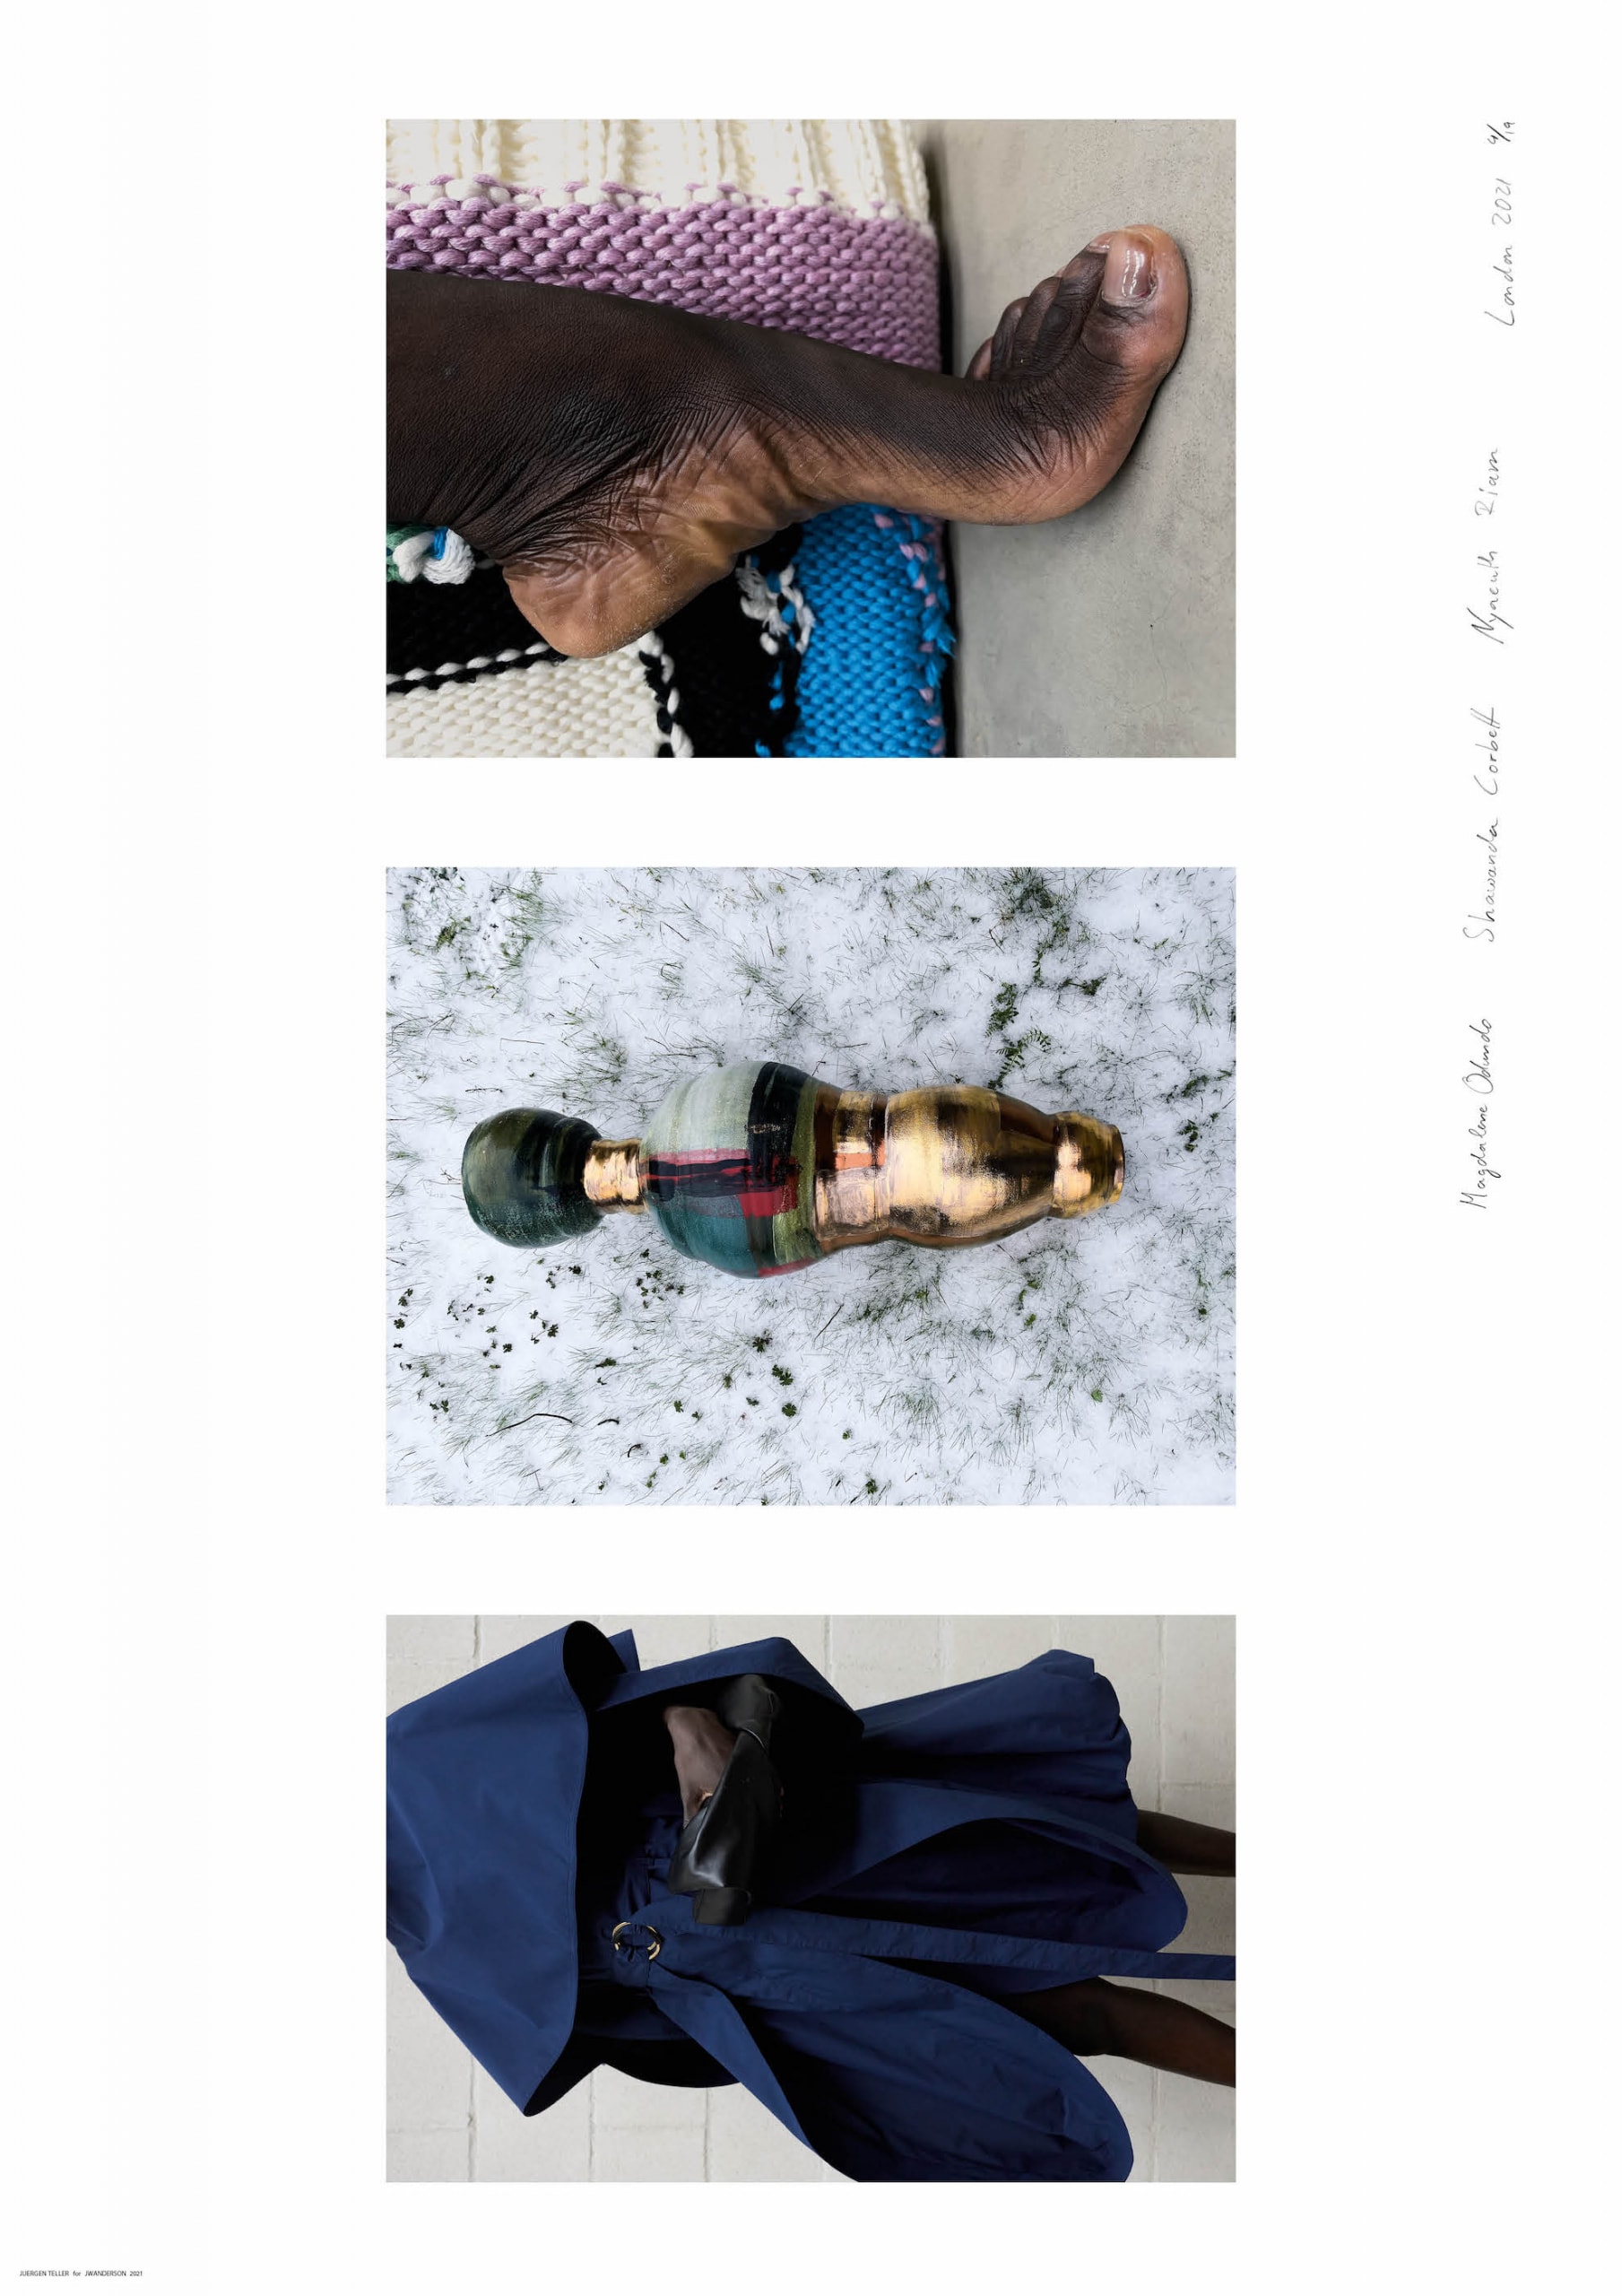 JW Anderson Fall/Winter 2021 Collection Presentation Juregen Teller Photography Posters Artist Collaborations